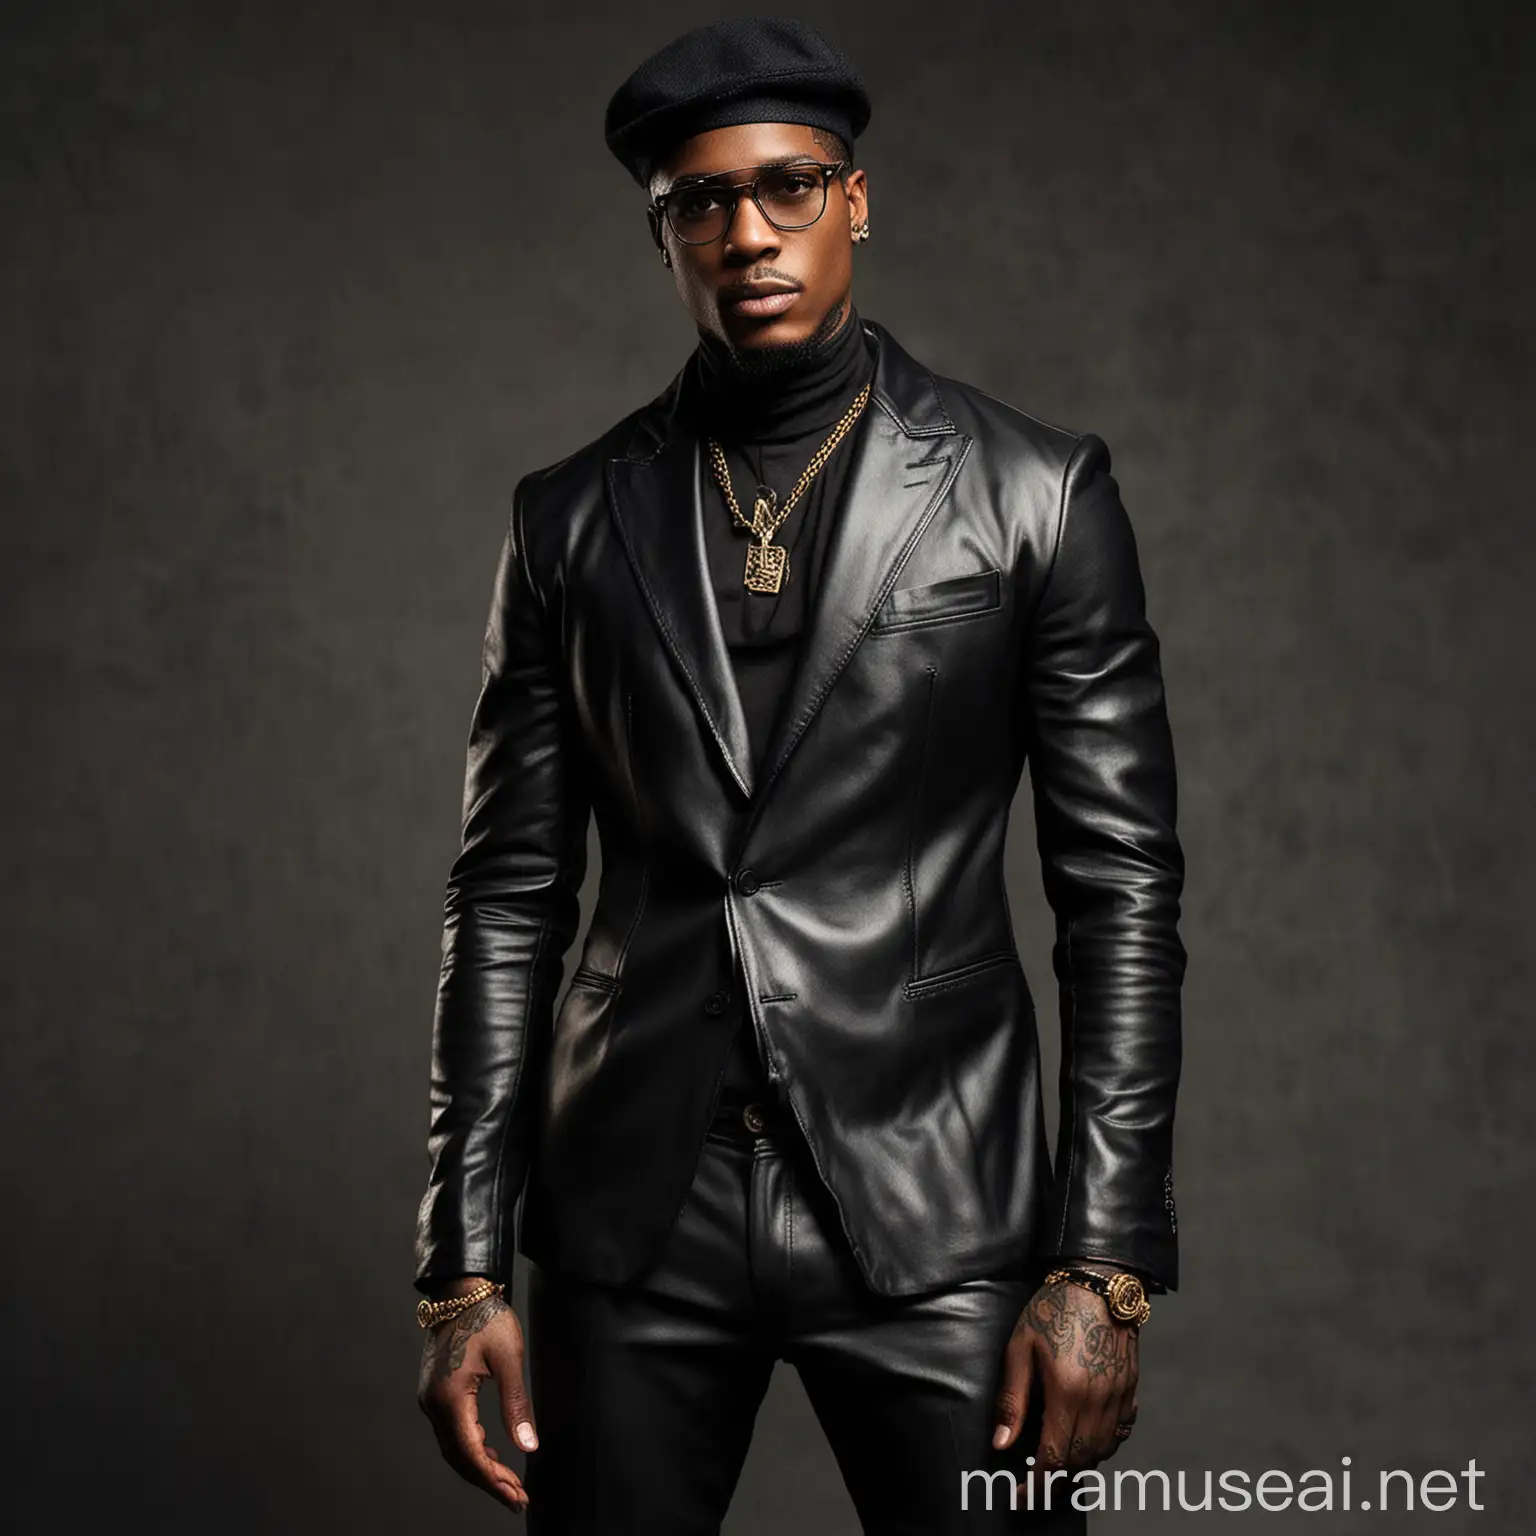 Charismatic Black Male Model in Stylish Leather Ensemble Portrait